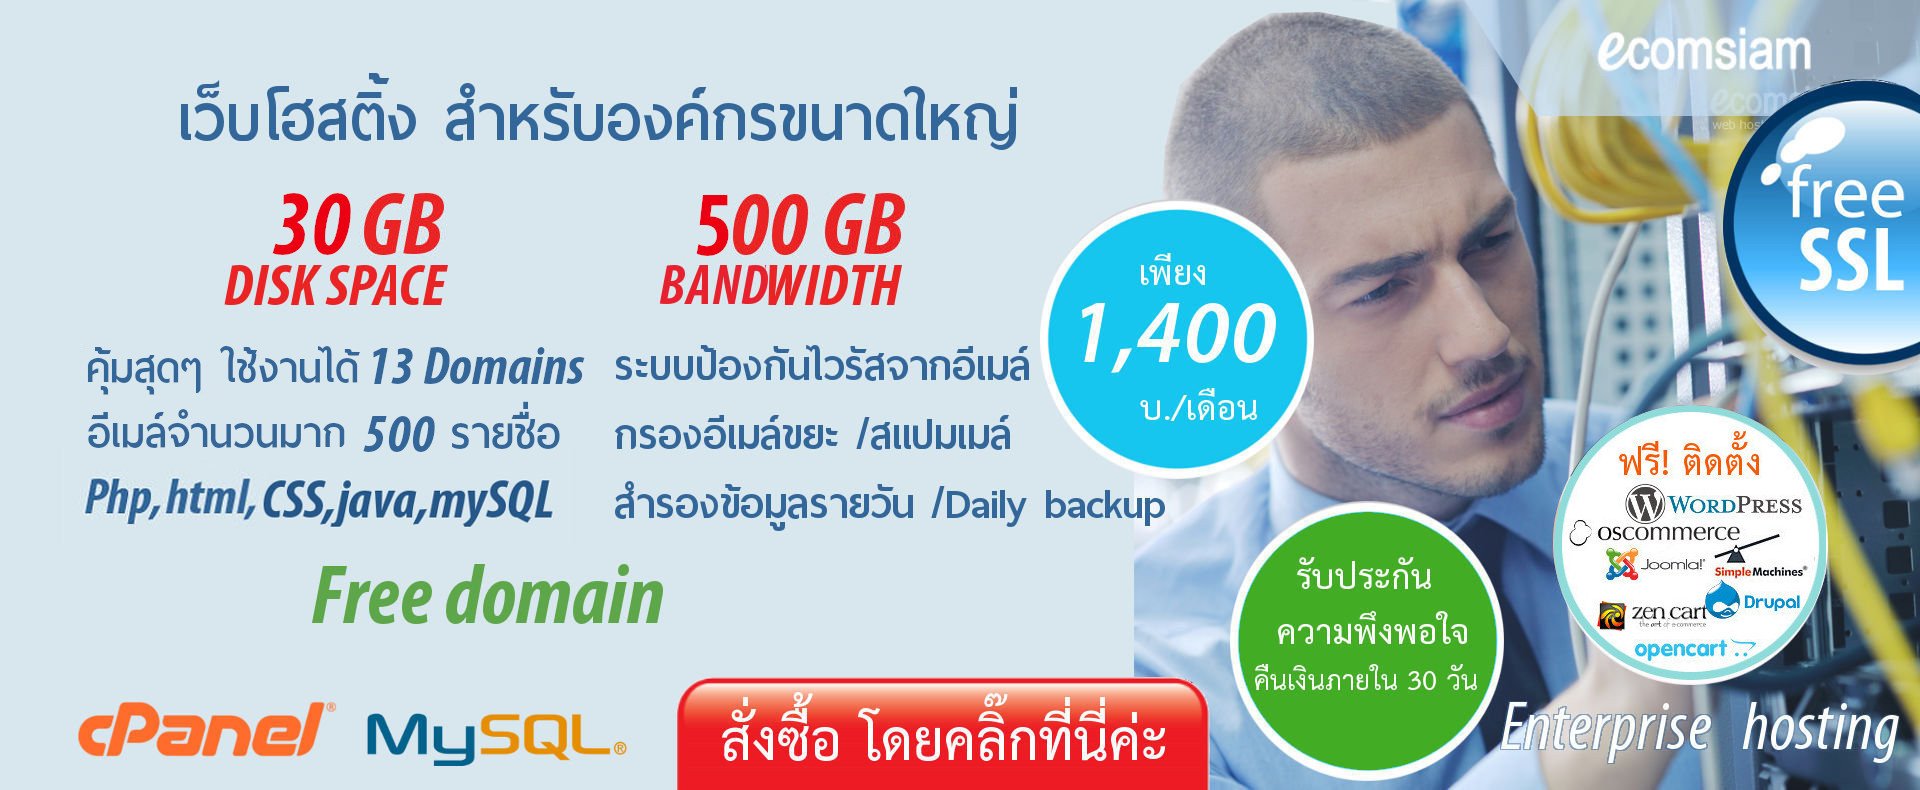 webhosting.com.co.th web hosting thailand แนะนำ Enterprise web hosting thailand เว็บโฮสต์ติ้งสำหรับองค์กรขนาดใหญ่ สำหรับใช้งานโดเมนจำนวนมาก ราคาเพียง 1,400 บ./เดือน เว็บโฮสติ้งไทย ฟรี โดเมน ฟรี SSL ฟรีติดตั้ง แนะนำเว็บโฮสติ้ง บริการลูกค้า  Support ดูแลดี โดย webhosting.com.co.th - enterprise web hosting thailand free domain